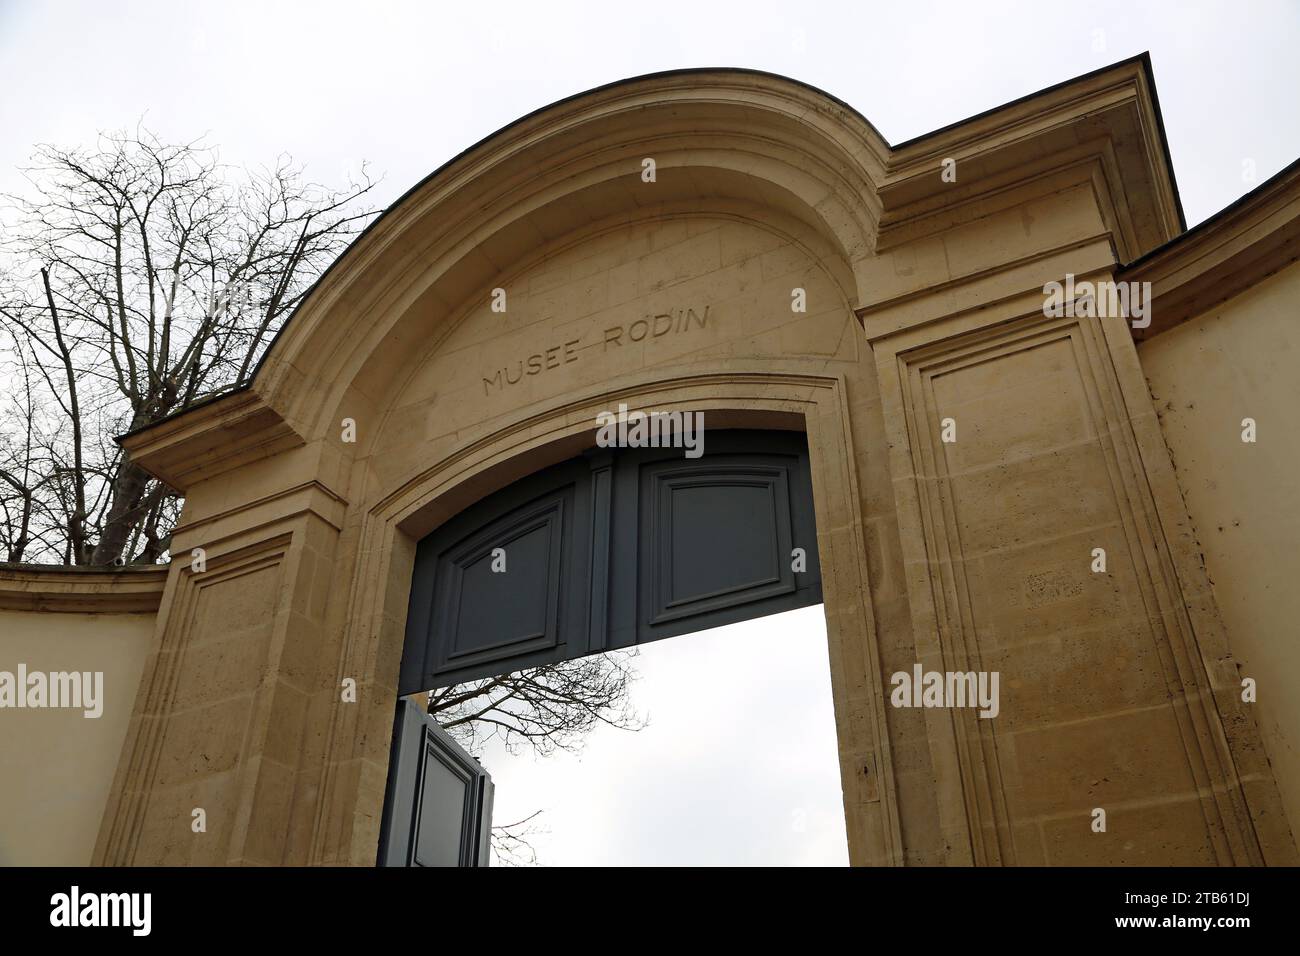 The gate to Rodin Museum, Paris Stock Photo